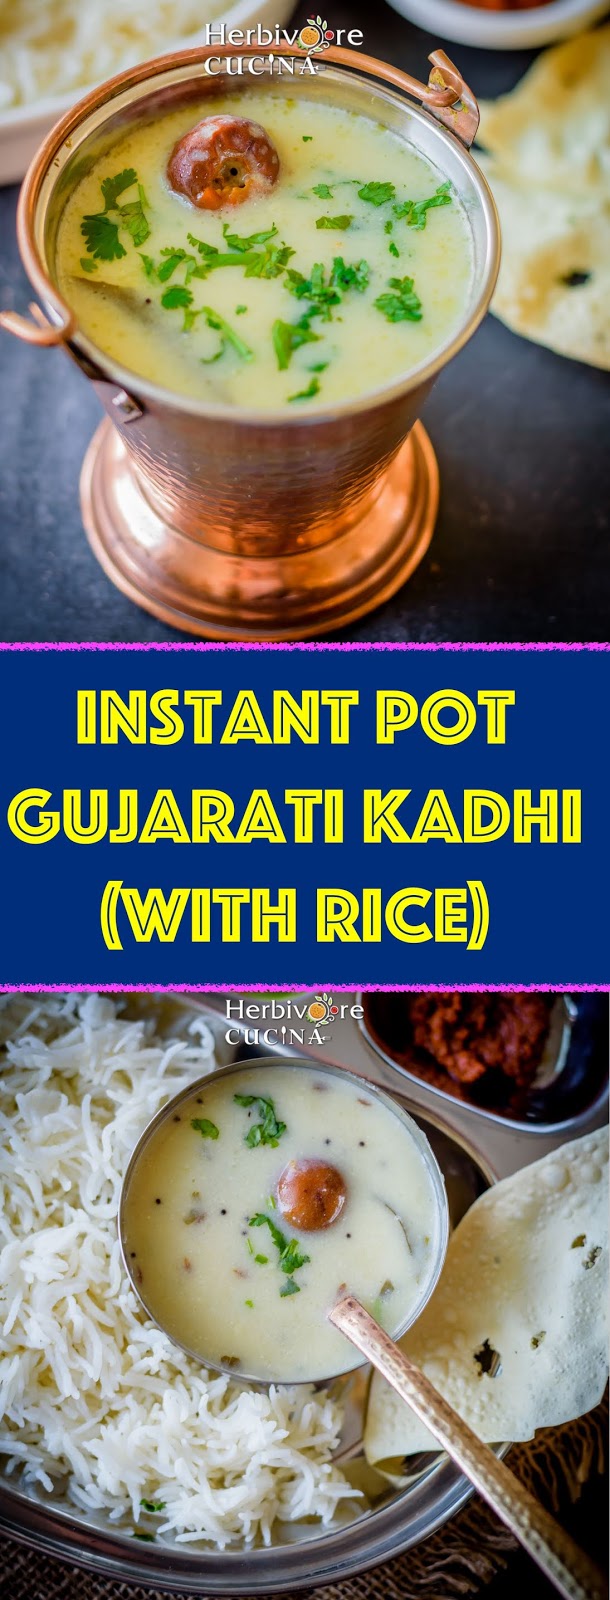 Instant Pot Gujarati Kadhi (with rice)